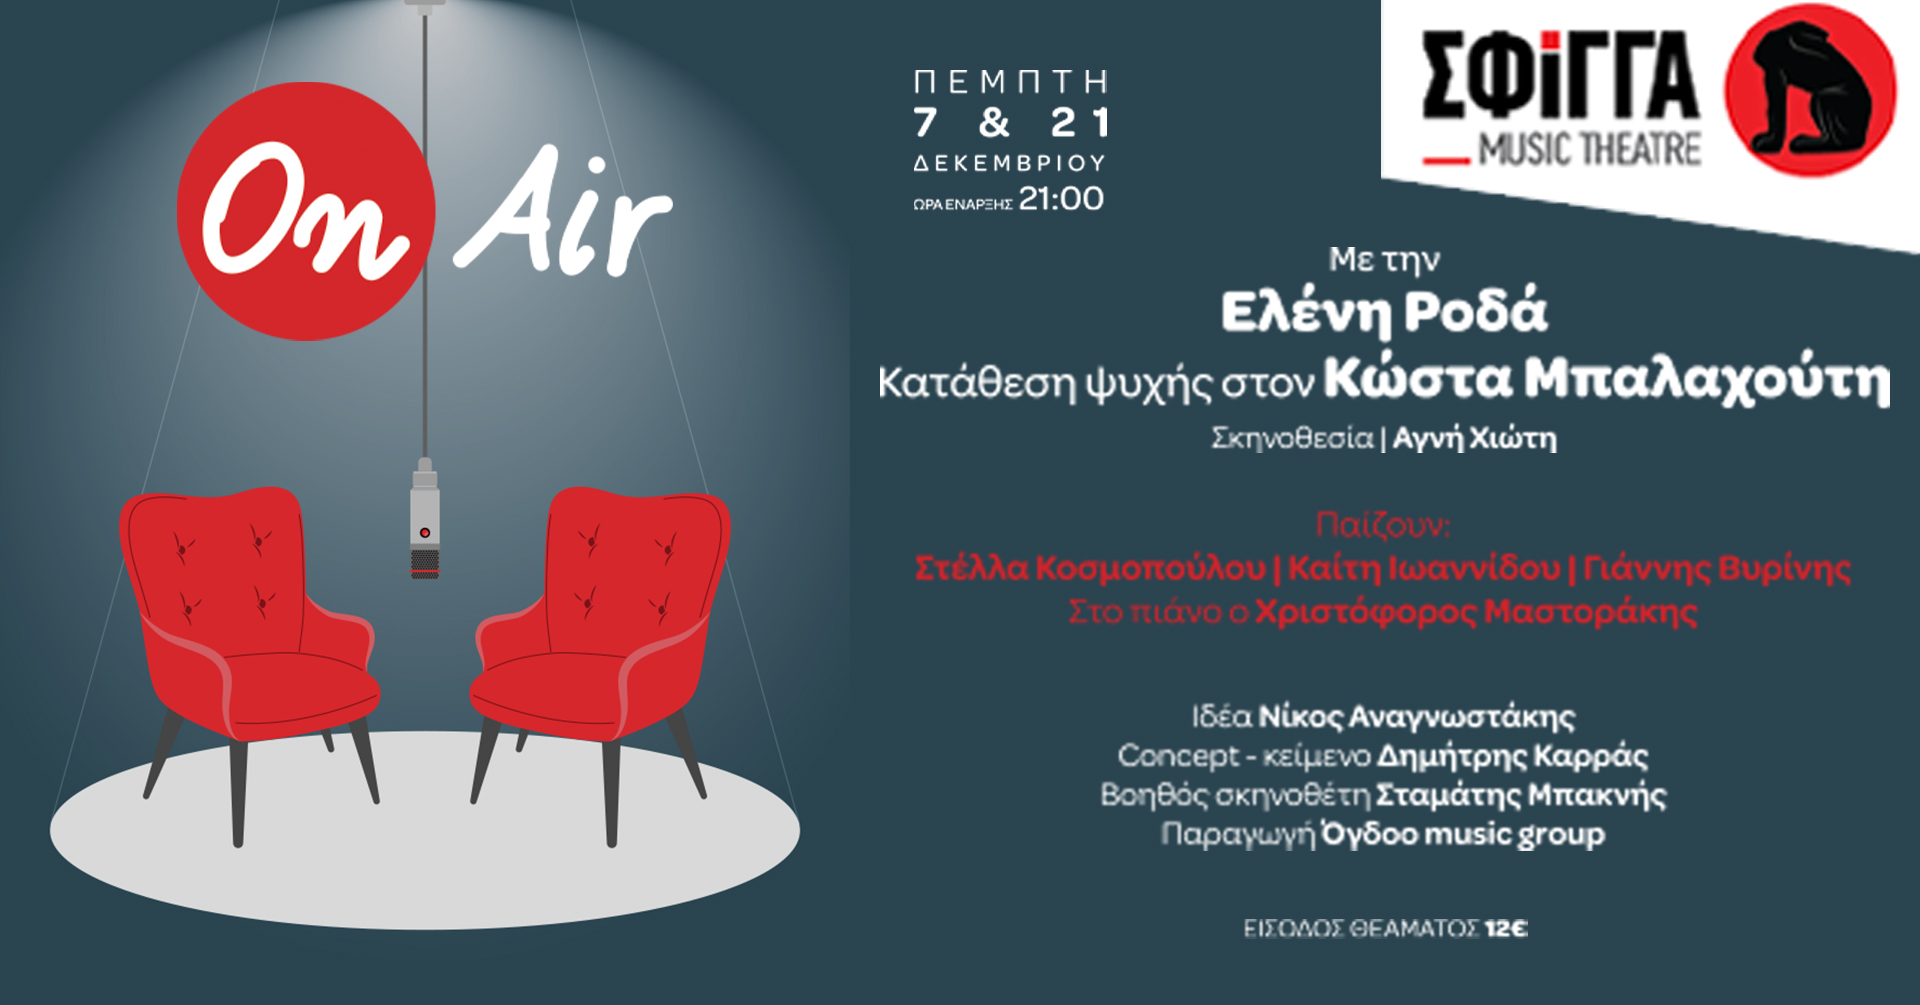 «OΝ AIR» με την Ελένη Ροδά - Κατάθεση ψυχής στον Κώστα Μπαλαχούτη, στις 7 &amp; 21 Δεκεμβρίου στη Σφίγγα